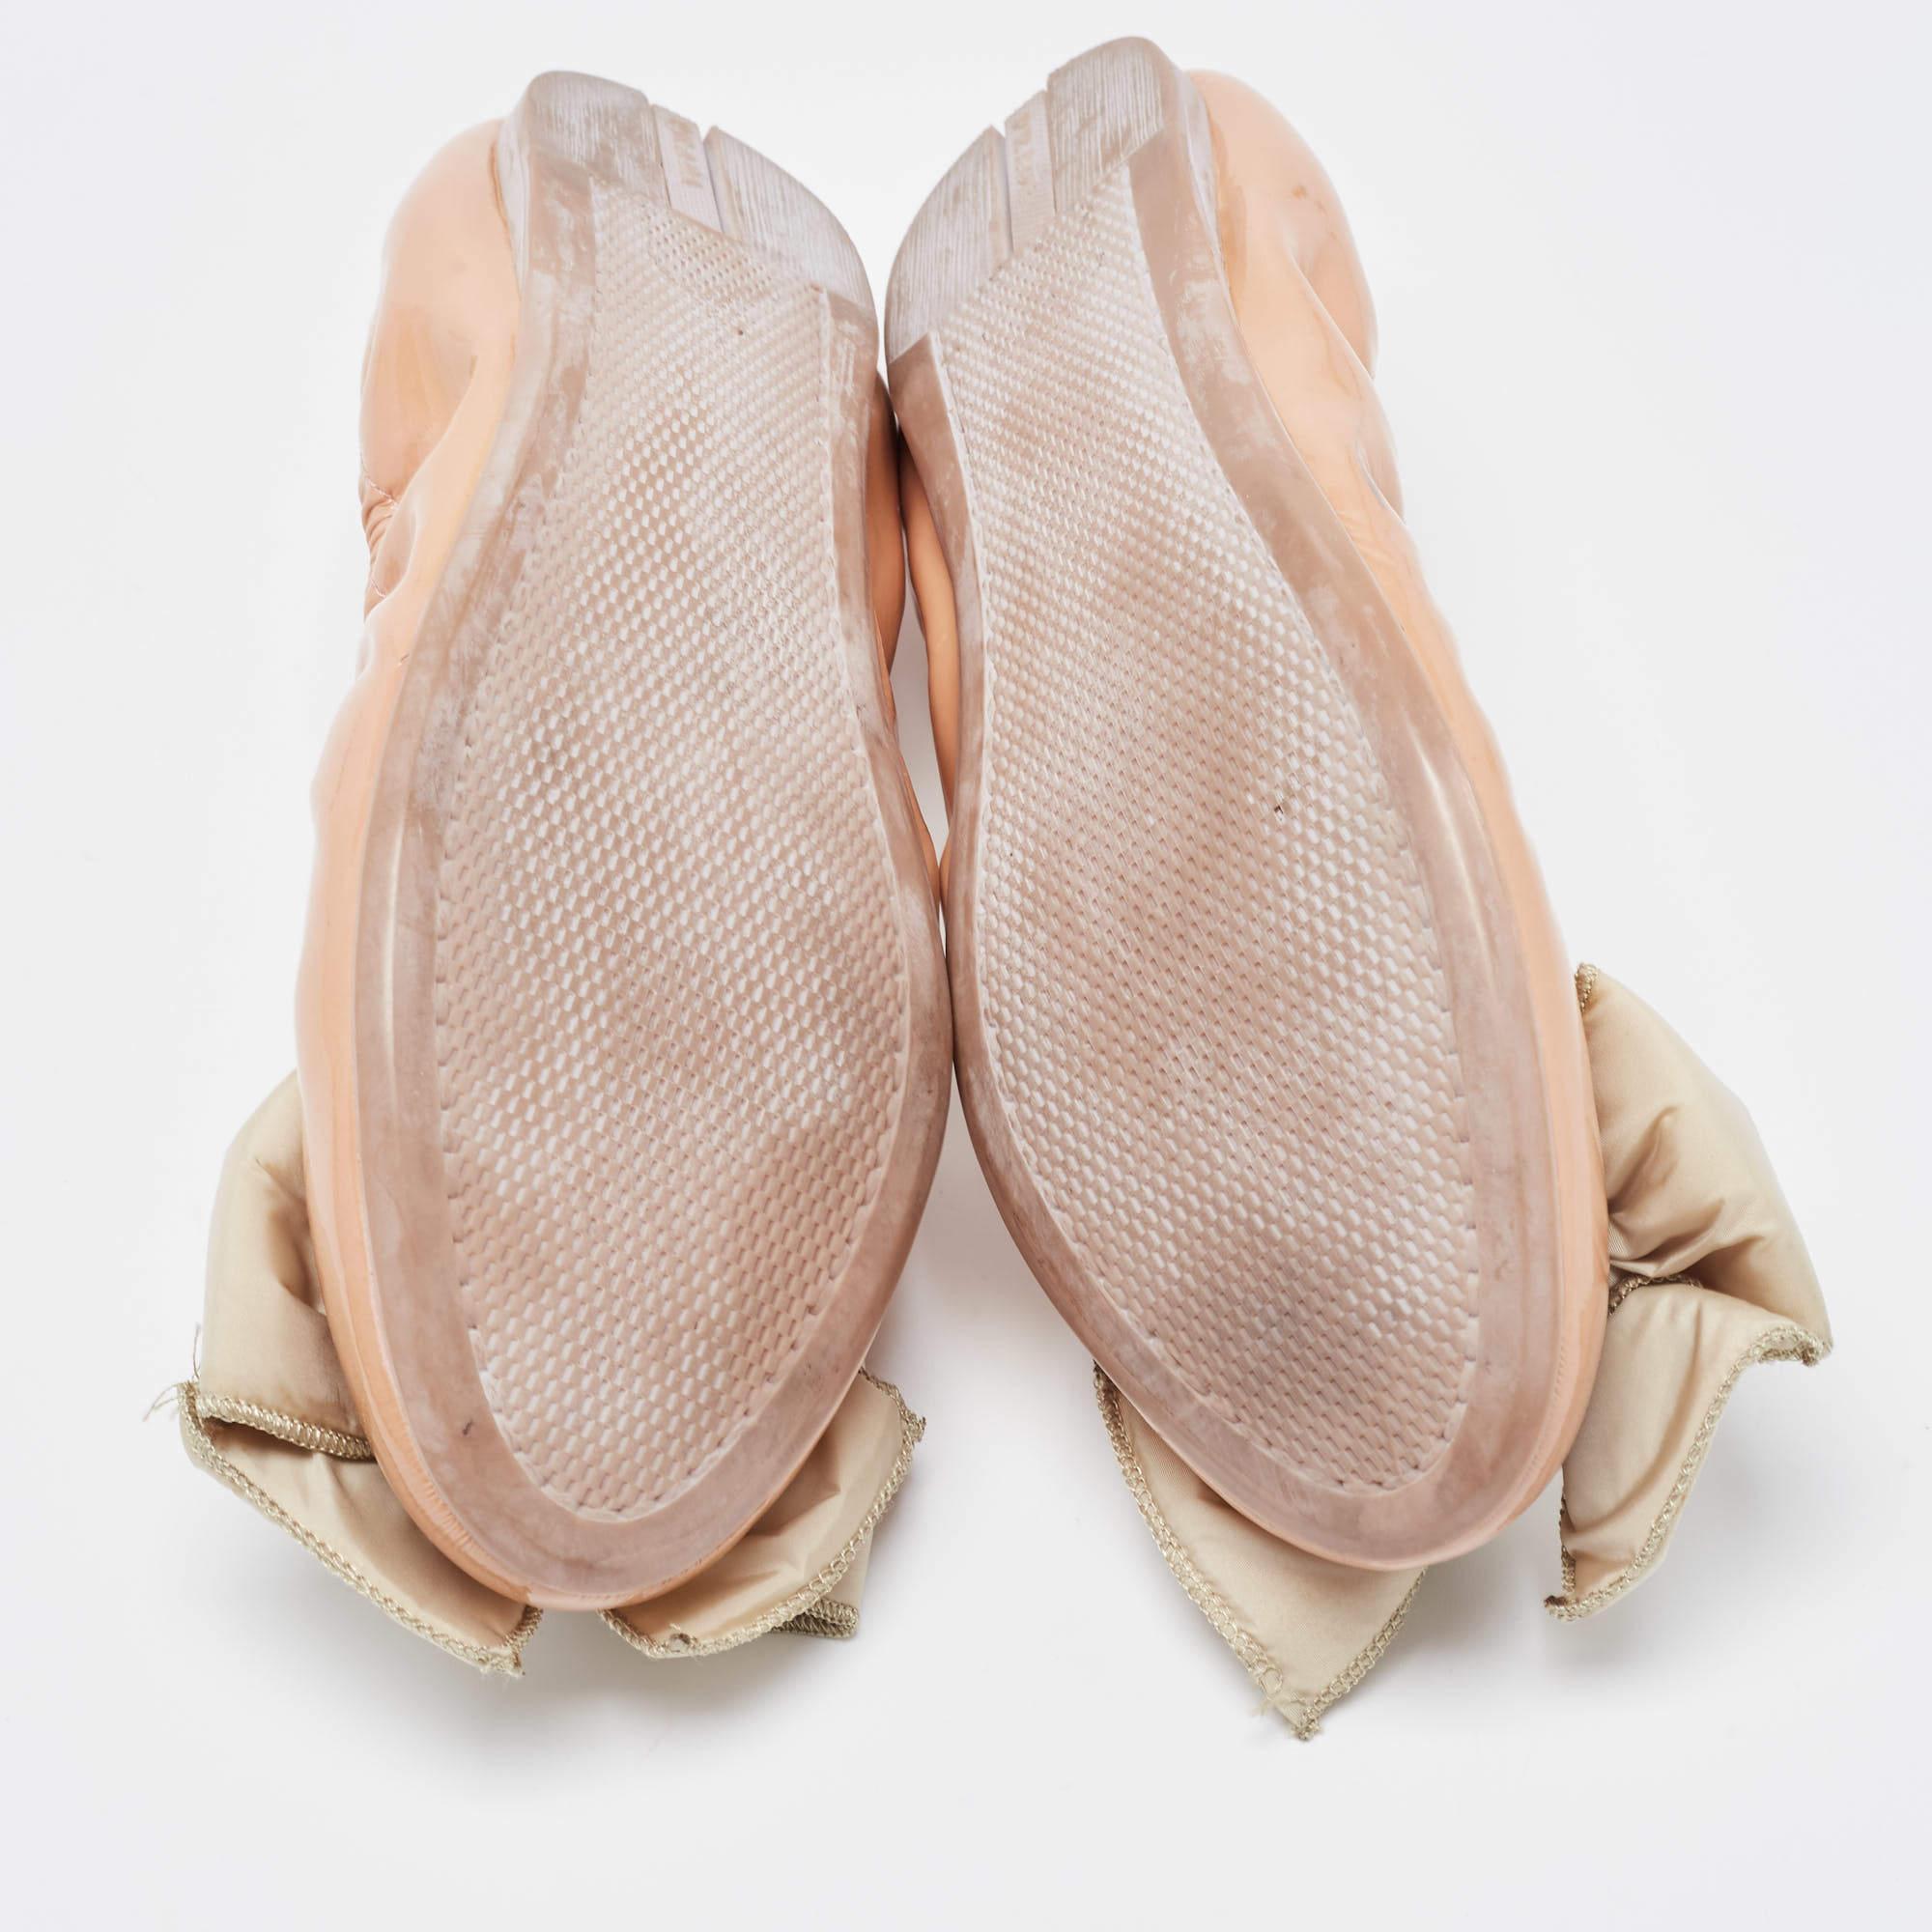 Prada Beige Patent Leather Bow Scrunch Ballet Flats Size 36.5 1